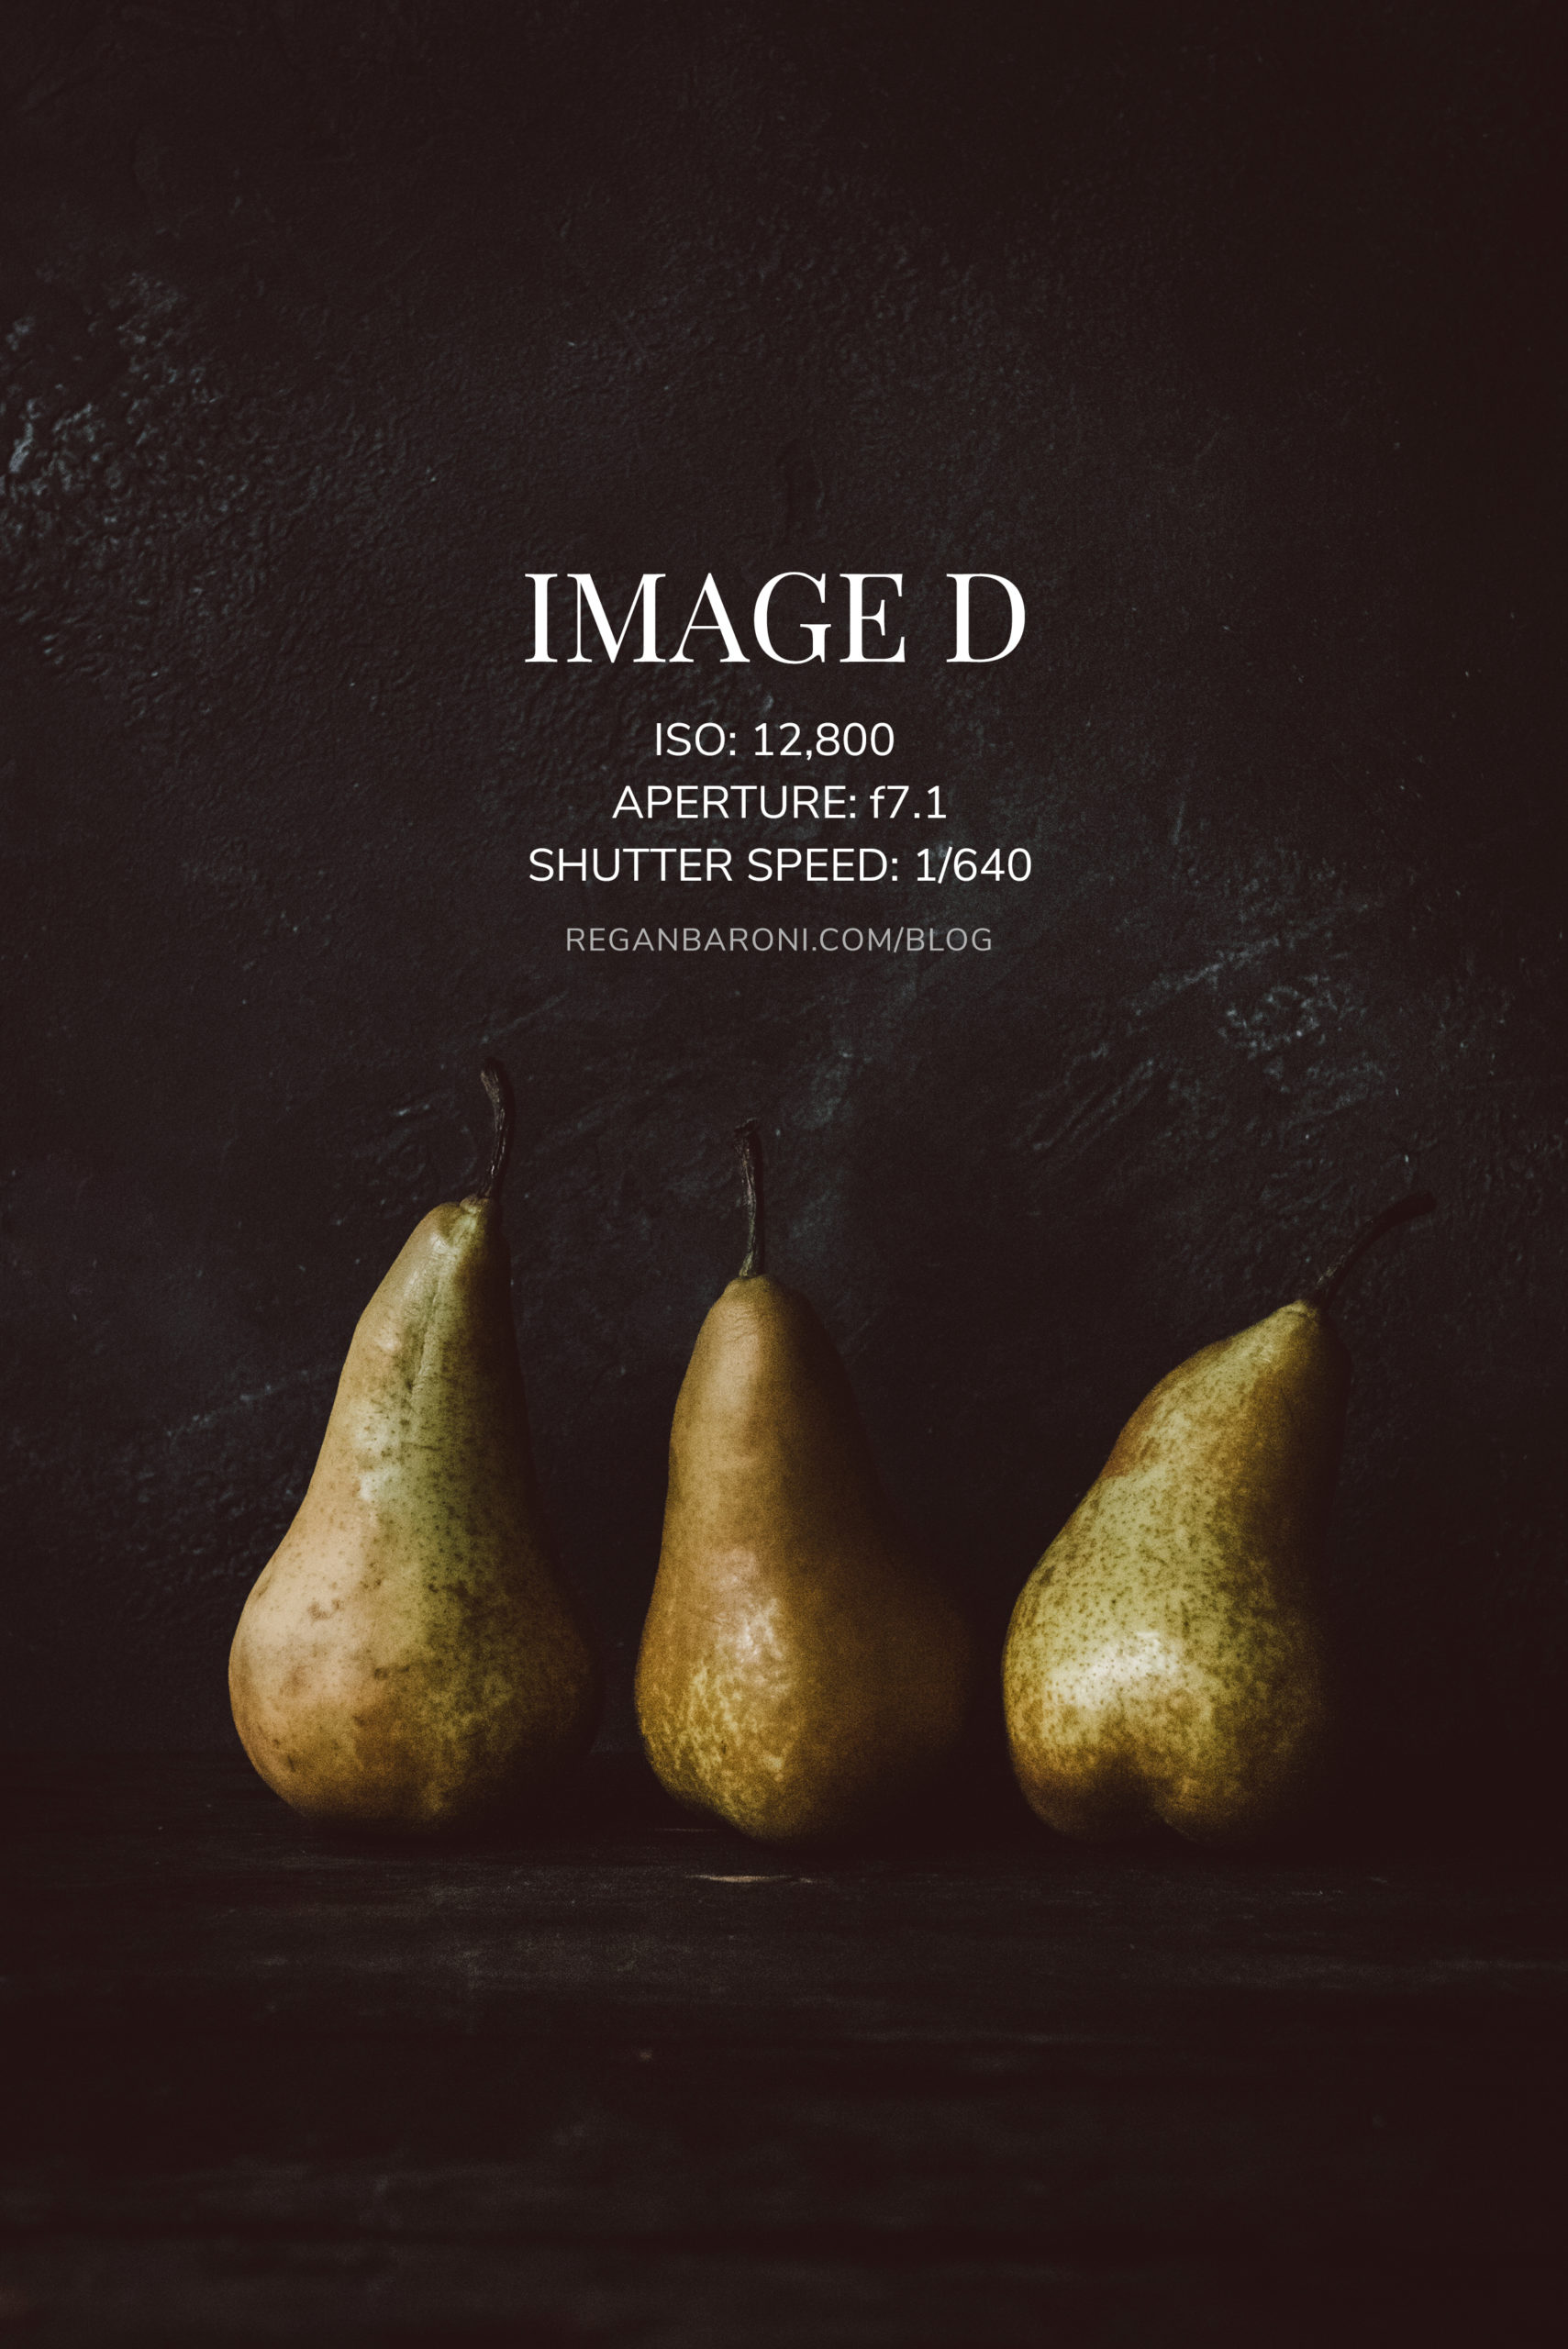 three pears on a dark background